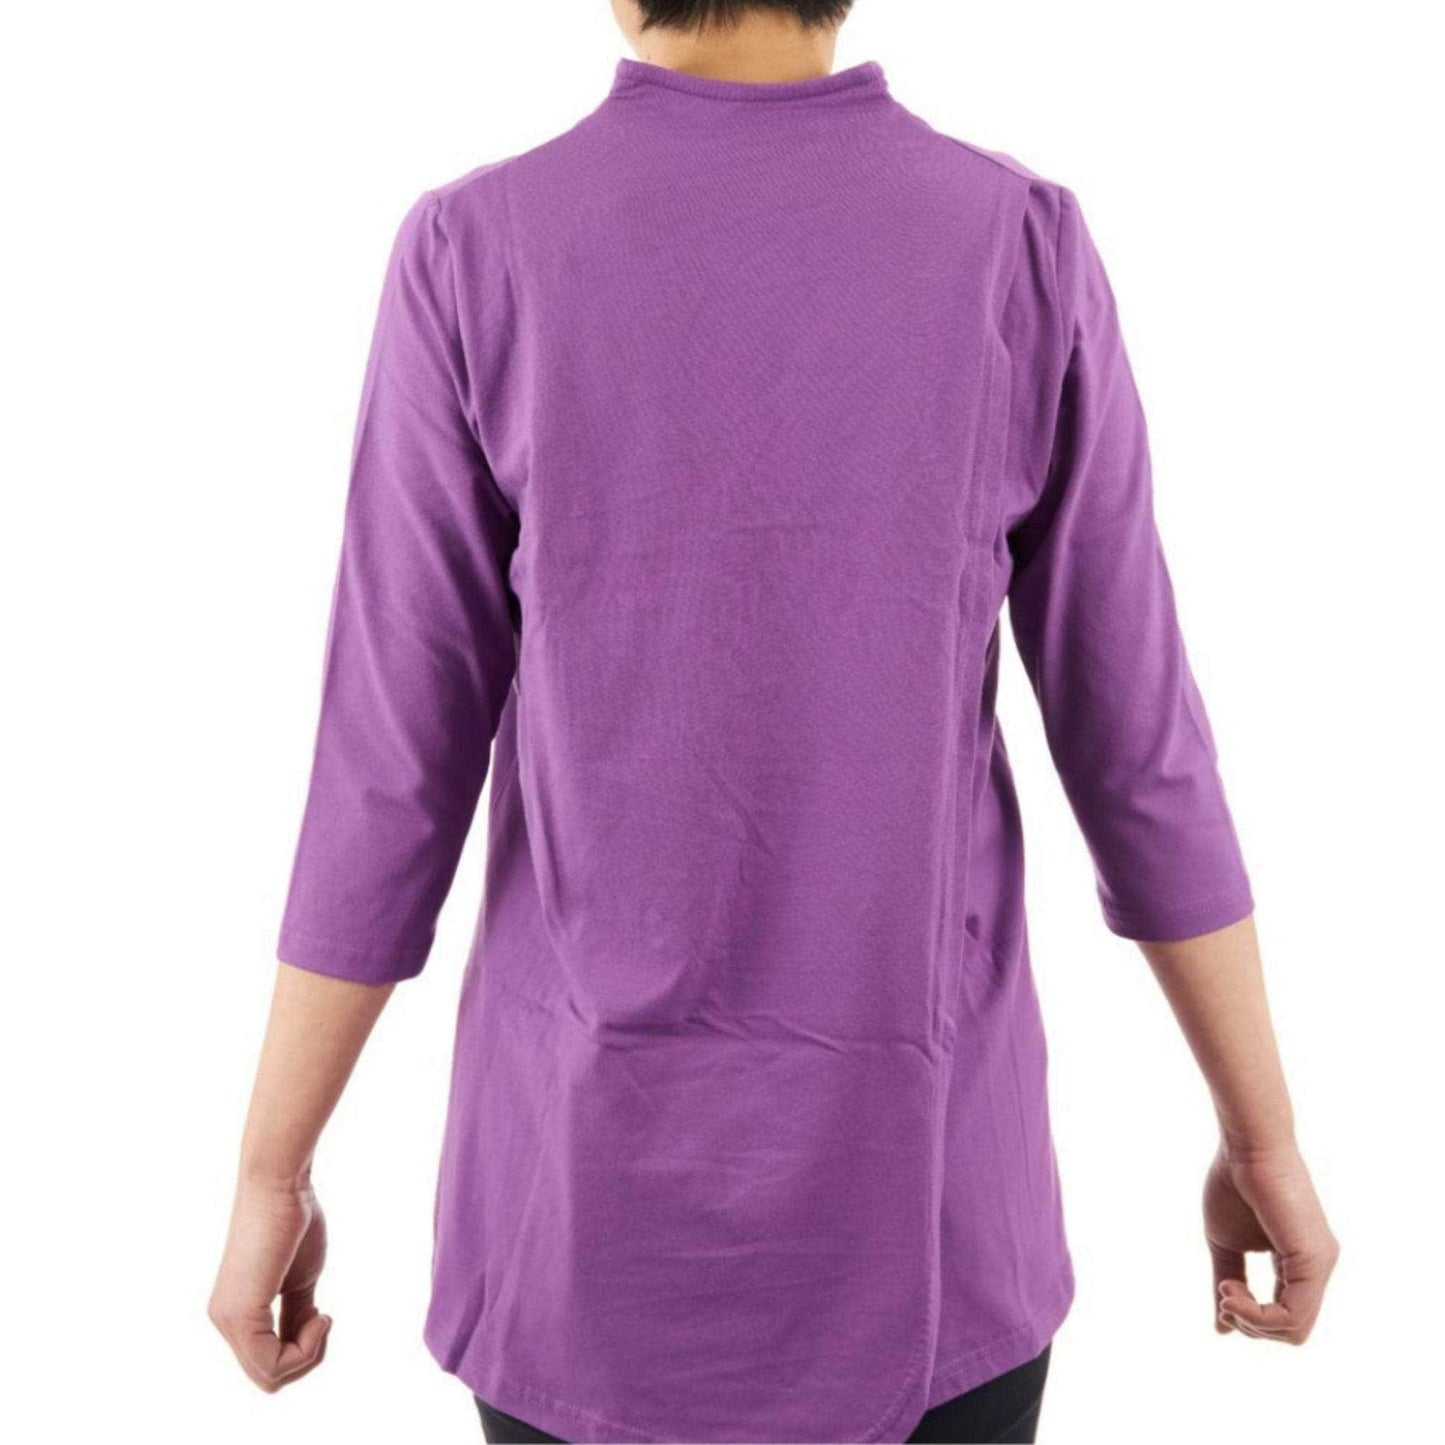 CC Women's Elizabeth 3/4 Sleeve V-Neck Top - Purple - Caring Clothing